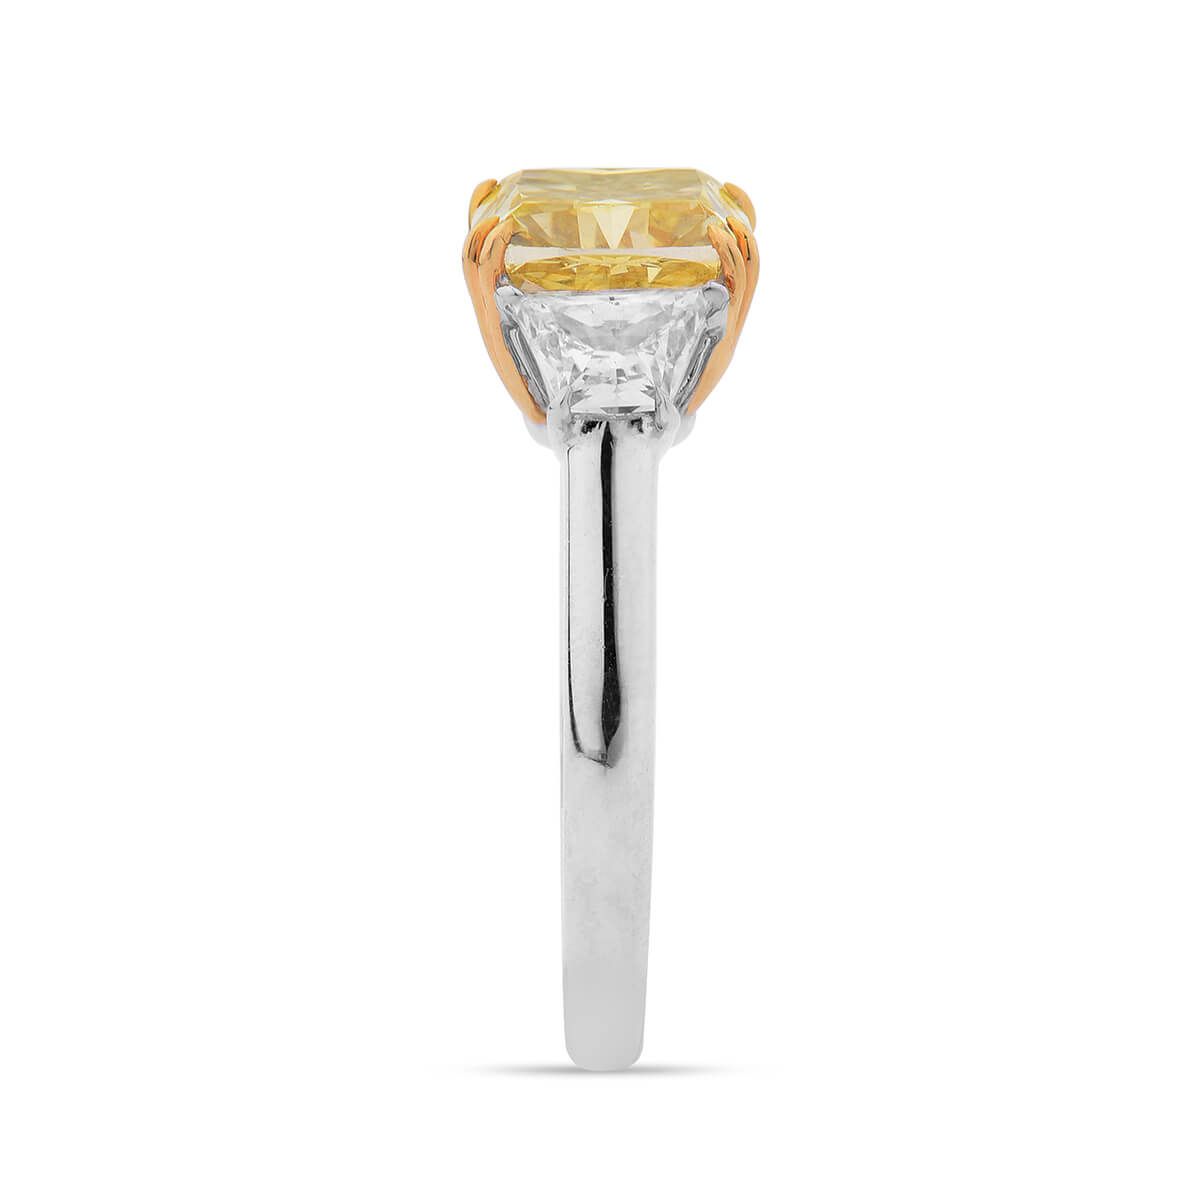 Fancy Vivid Yellow Diamond Ring, 2.60 Ct. (3.37 Ct. TW), Cushion shape, GIA Certified, 5161430482